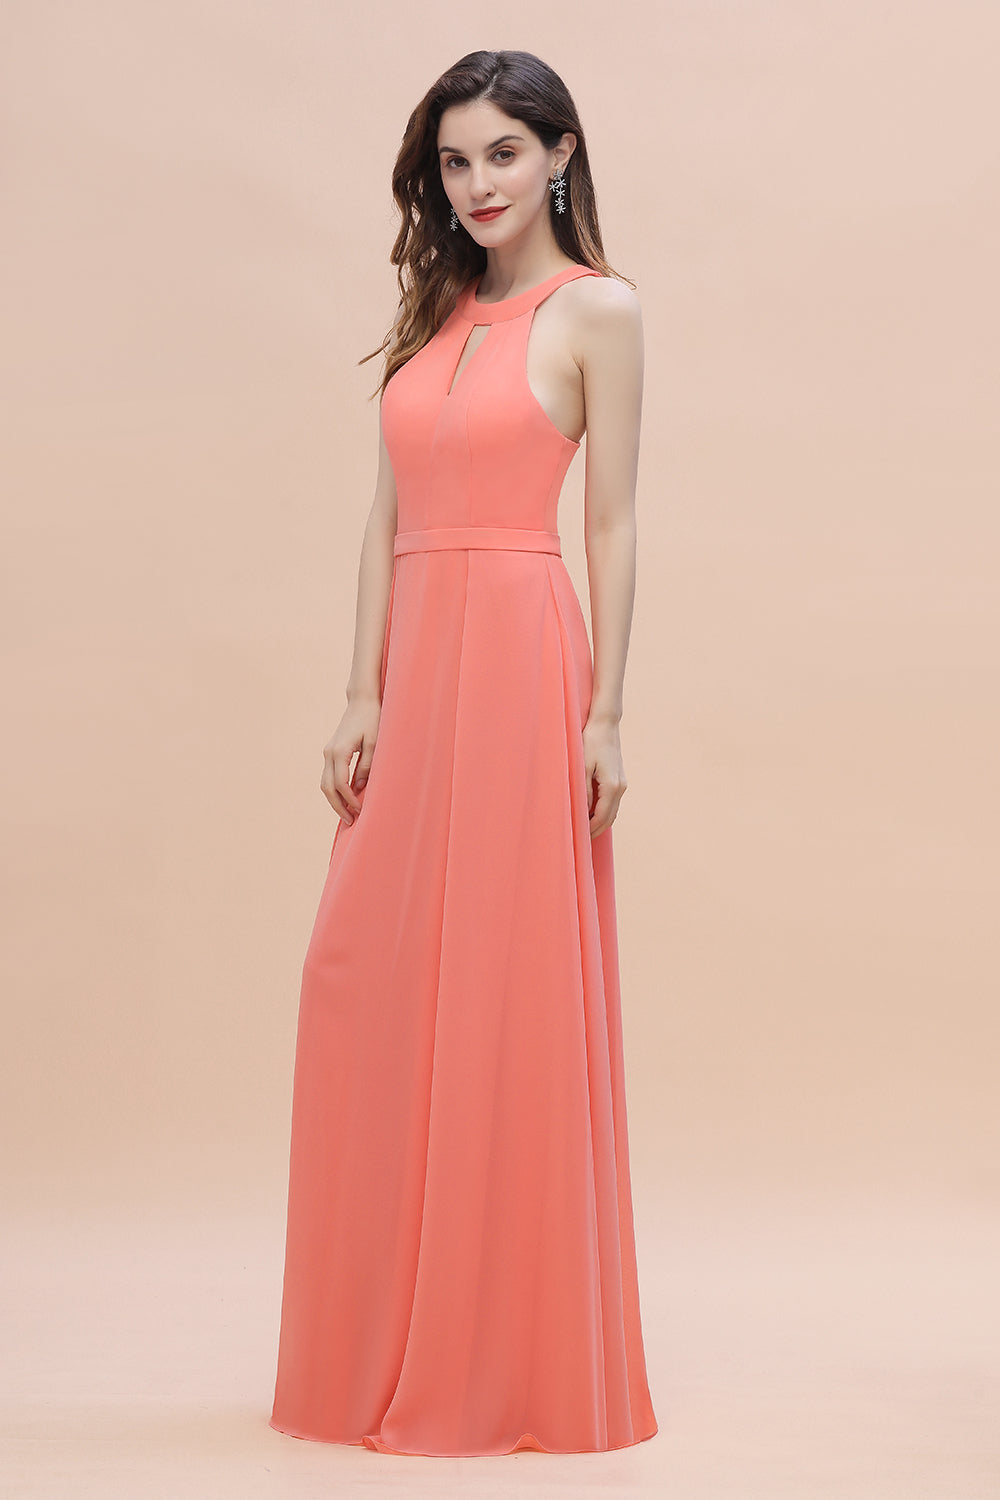 Simple Jewel Sleeveless Coral Chiffon Bridesmaid Dress Online-27dress